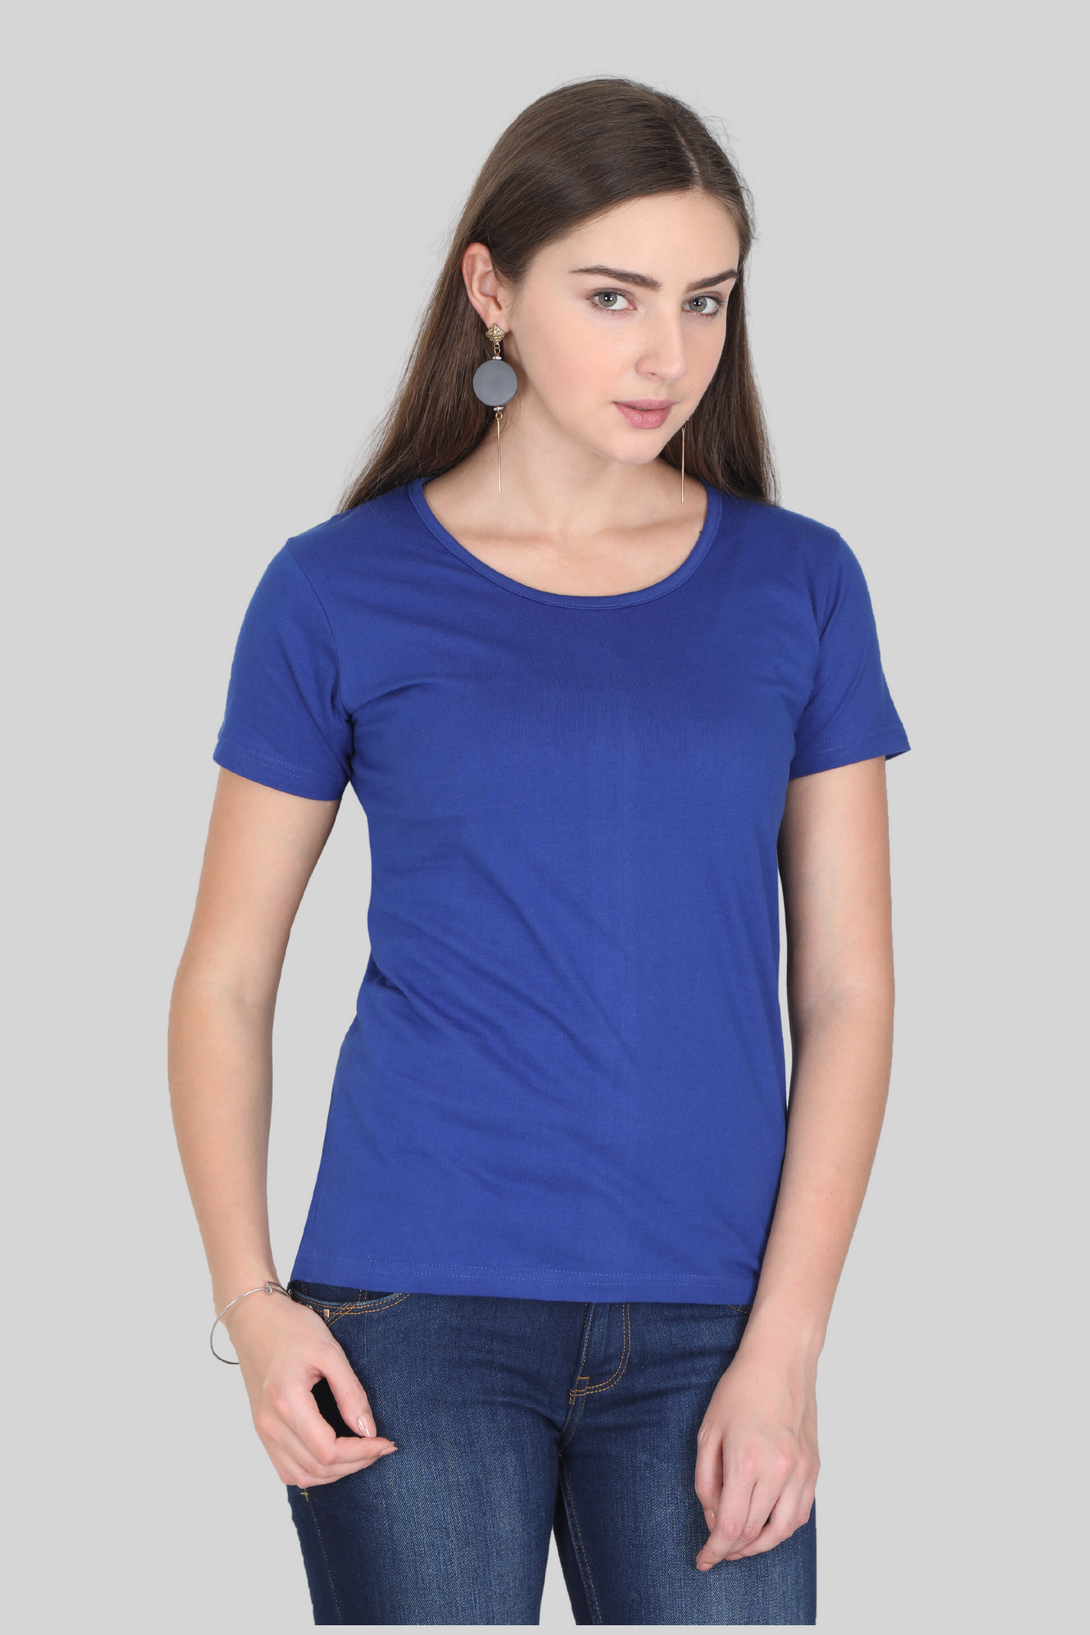 Royal Blue Scoop Neck T-Shirt For Women - WowWaves - 1